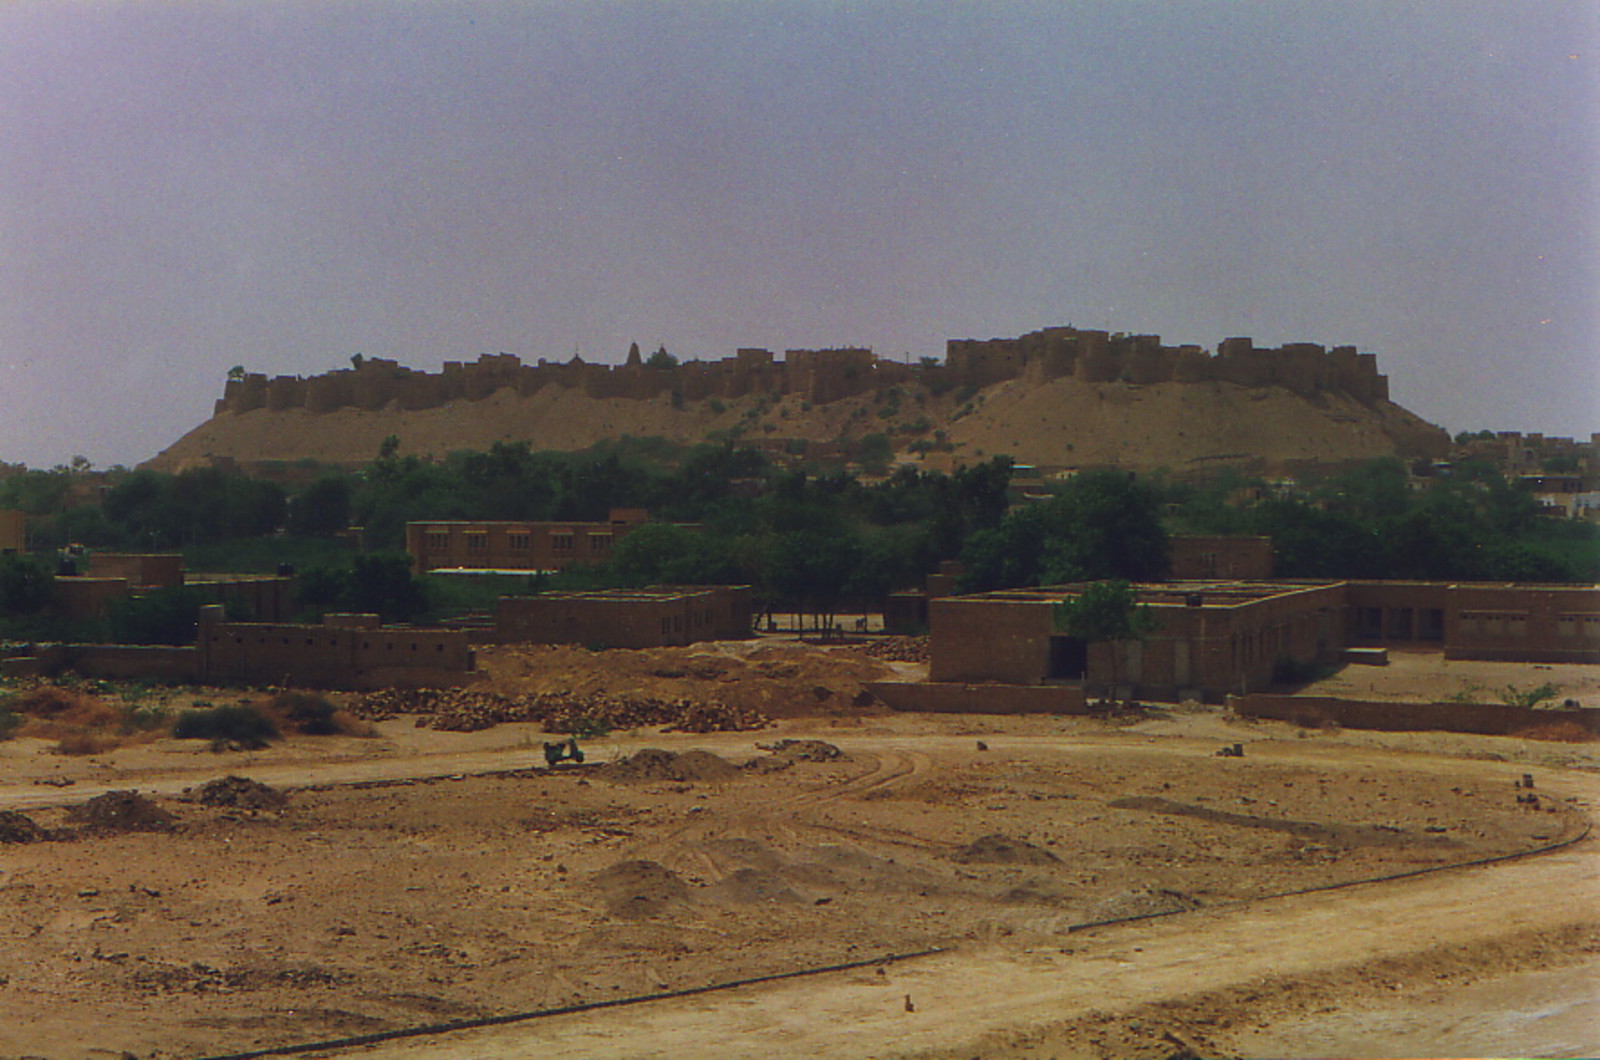 The fortress at Jaisalmer